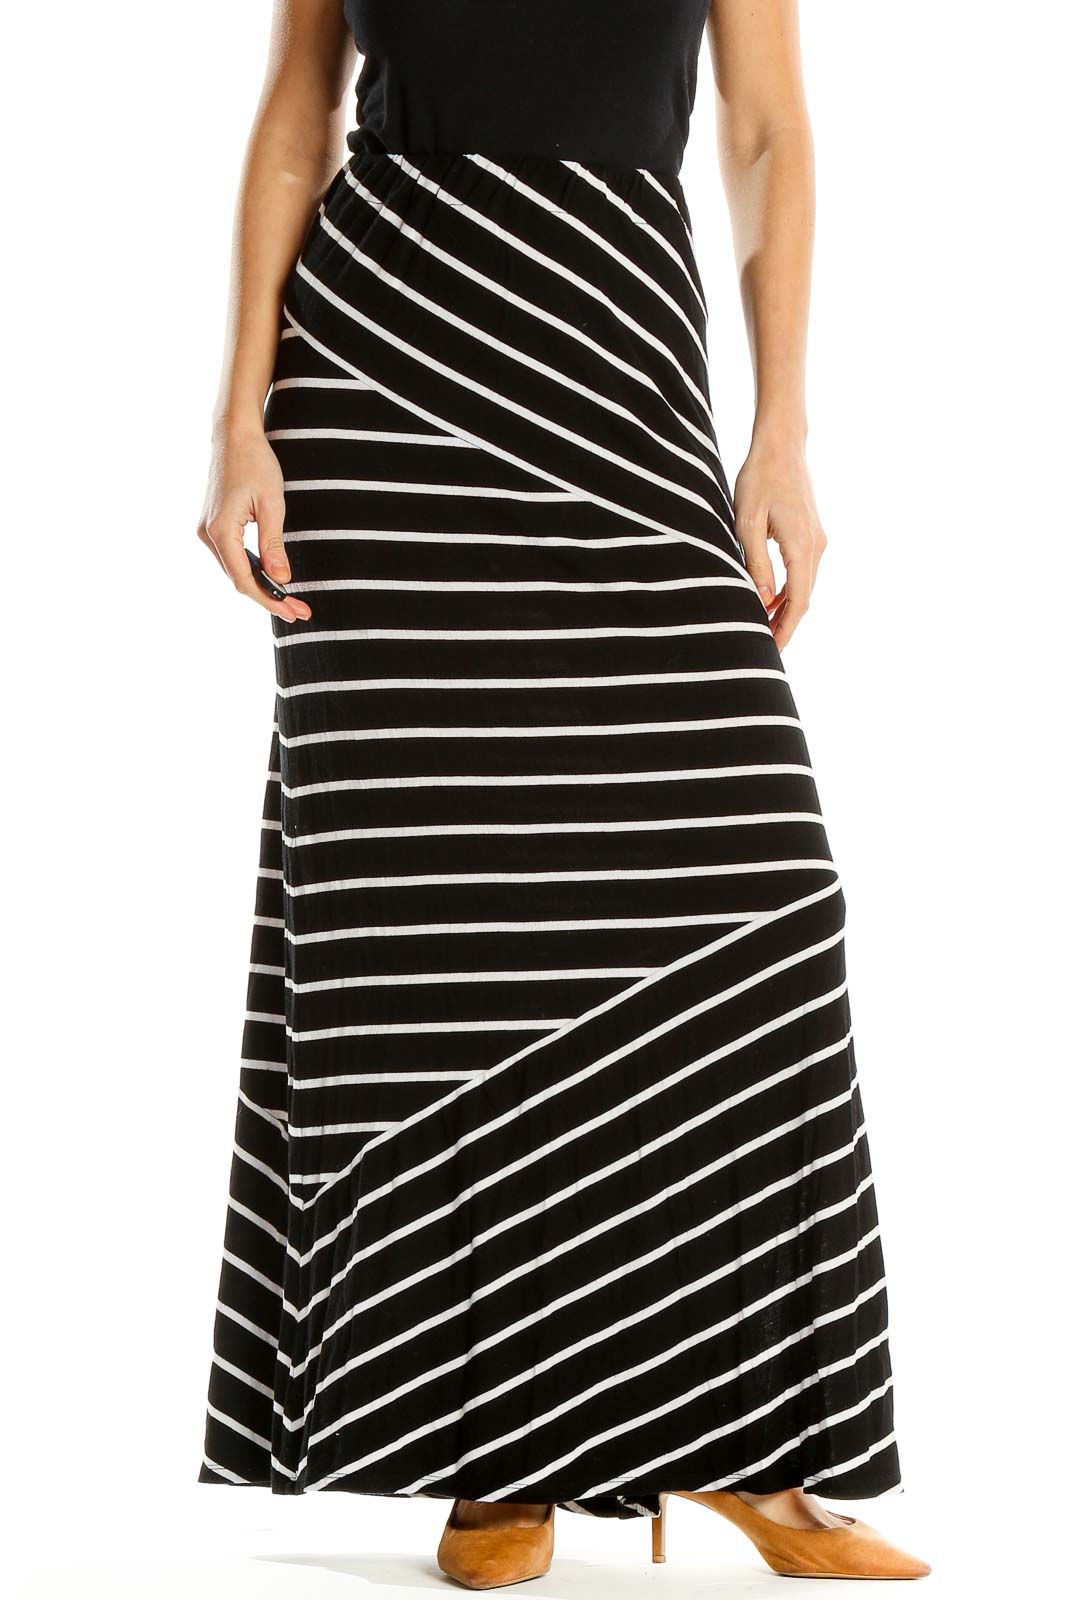 Black White Striped Classic Maxi Skirt Front